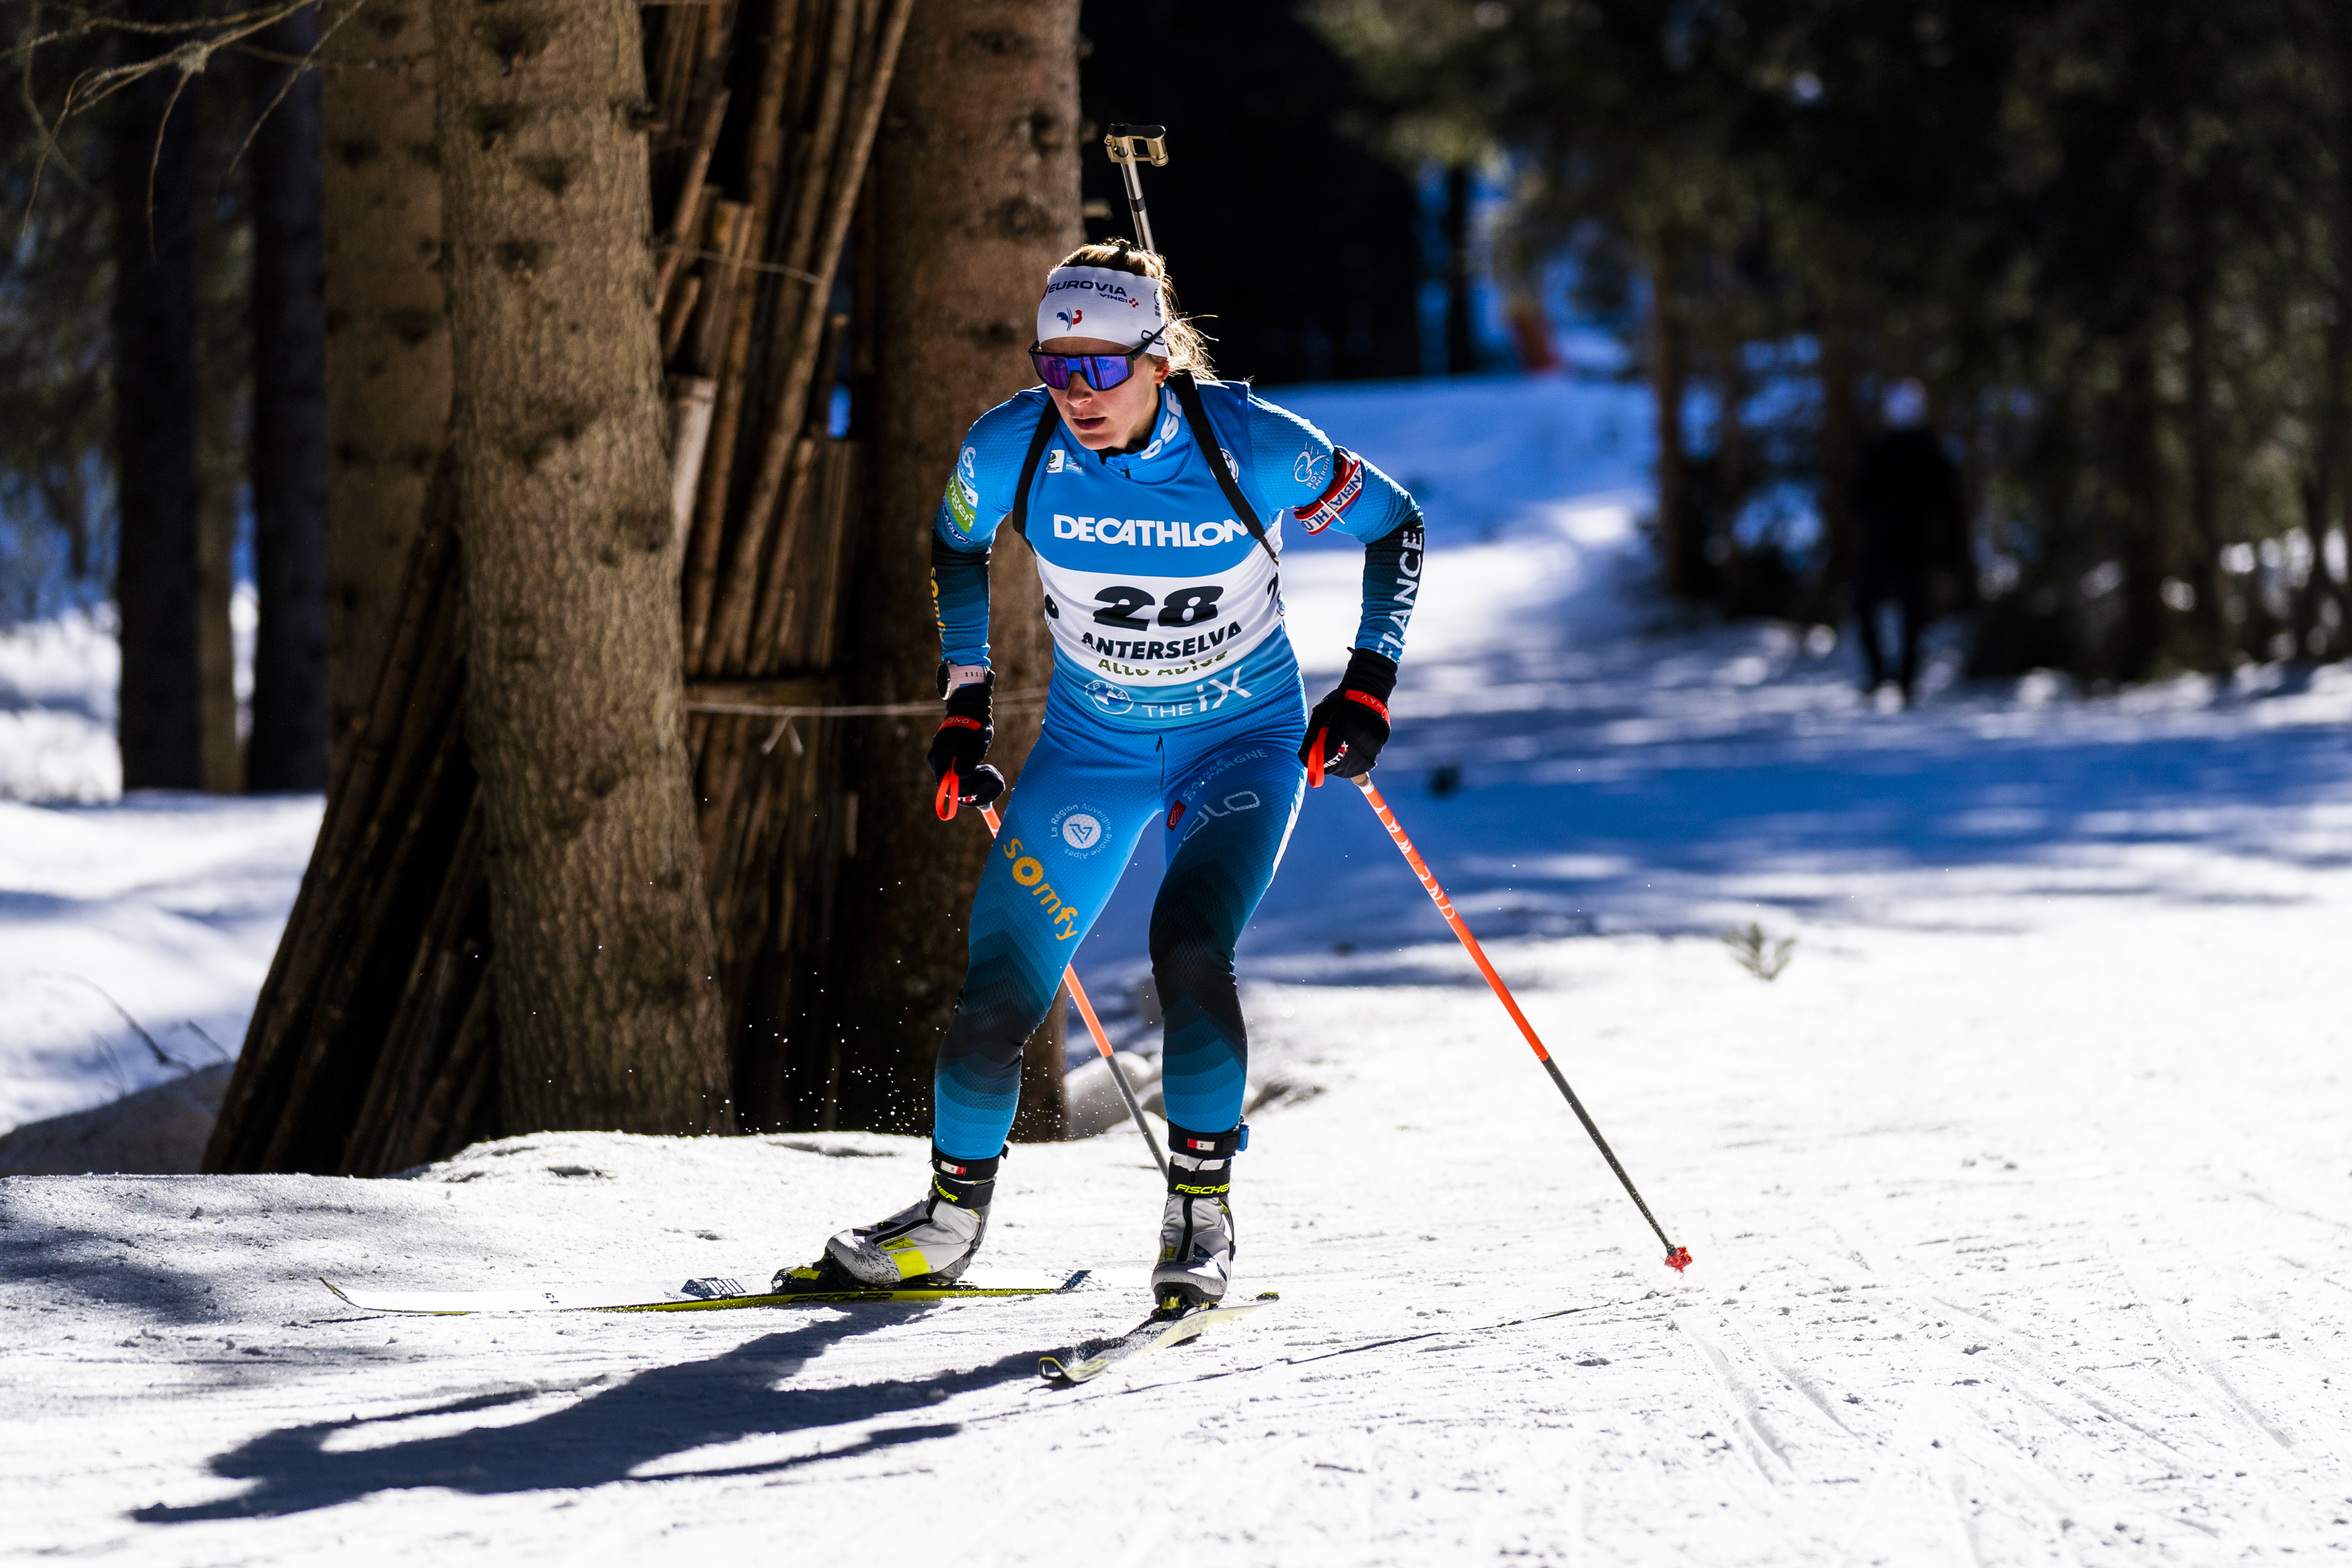 Justine Braisaz-Bouchet was the fastest skier in the world cup.